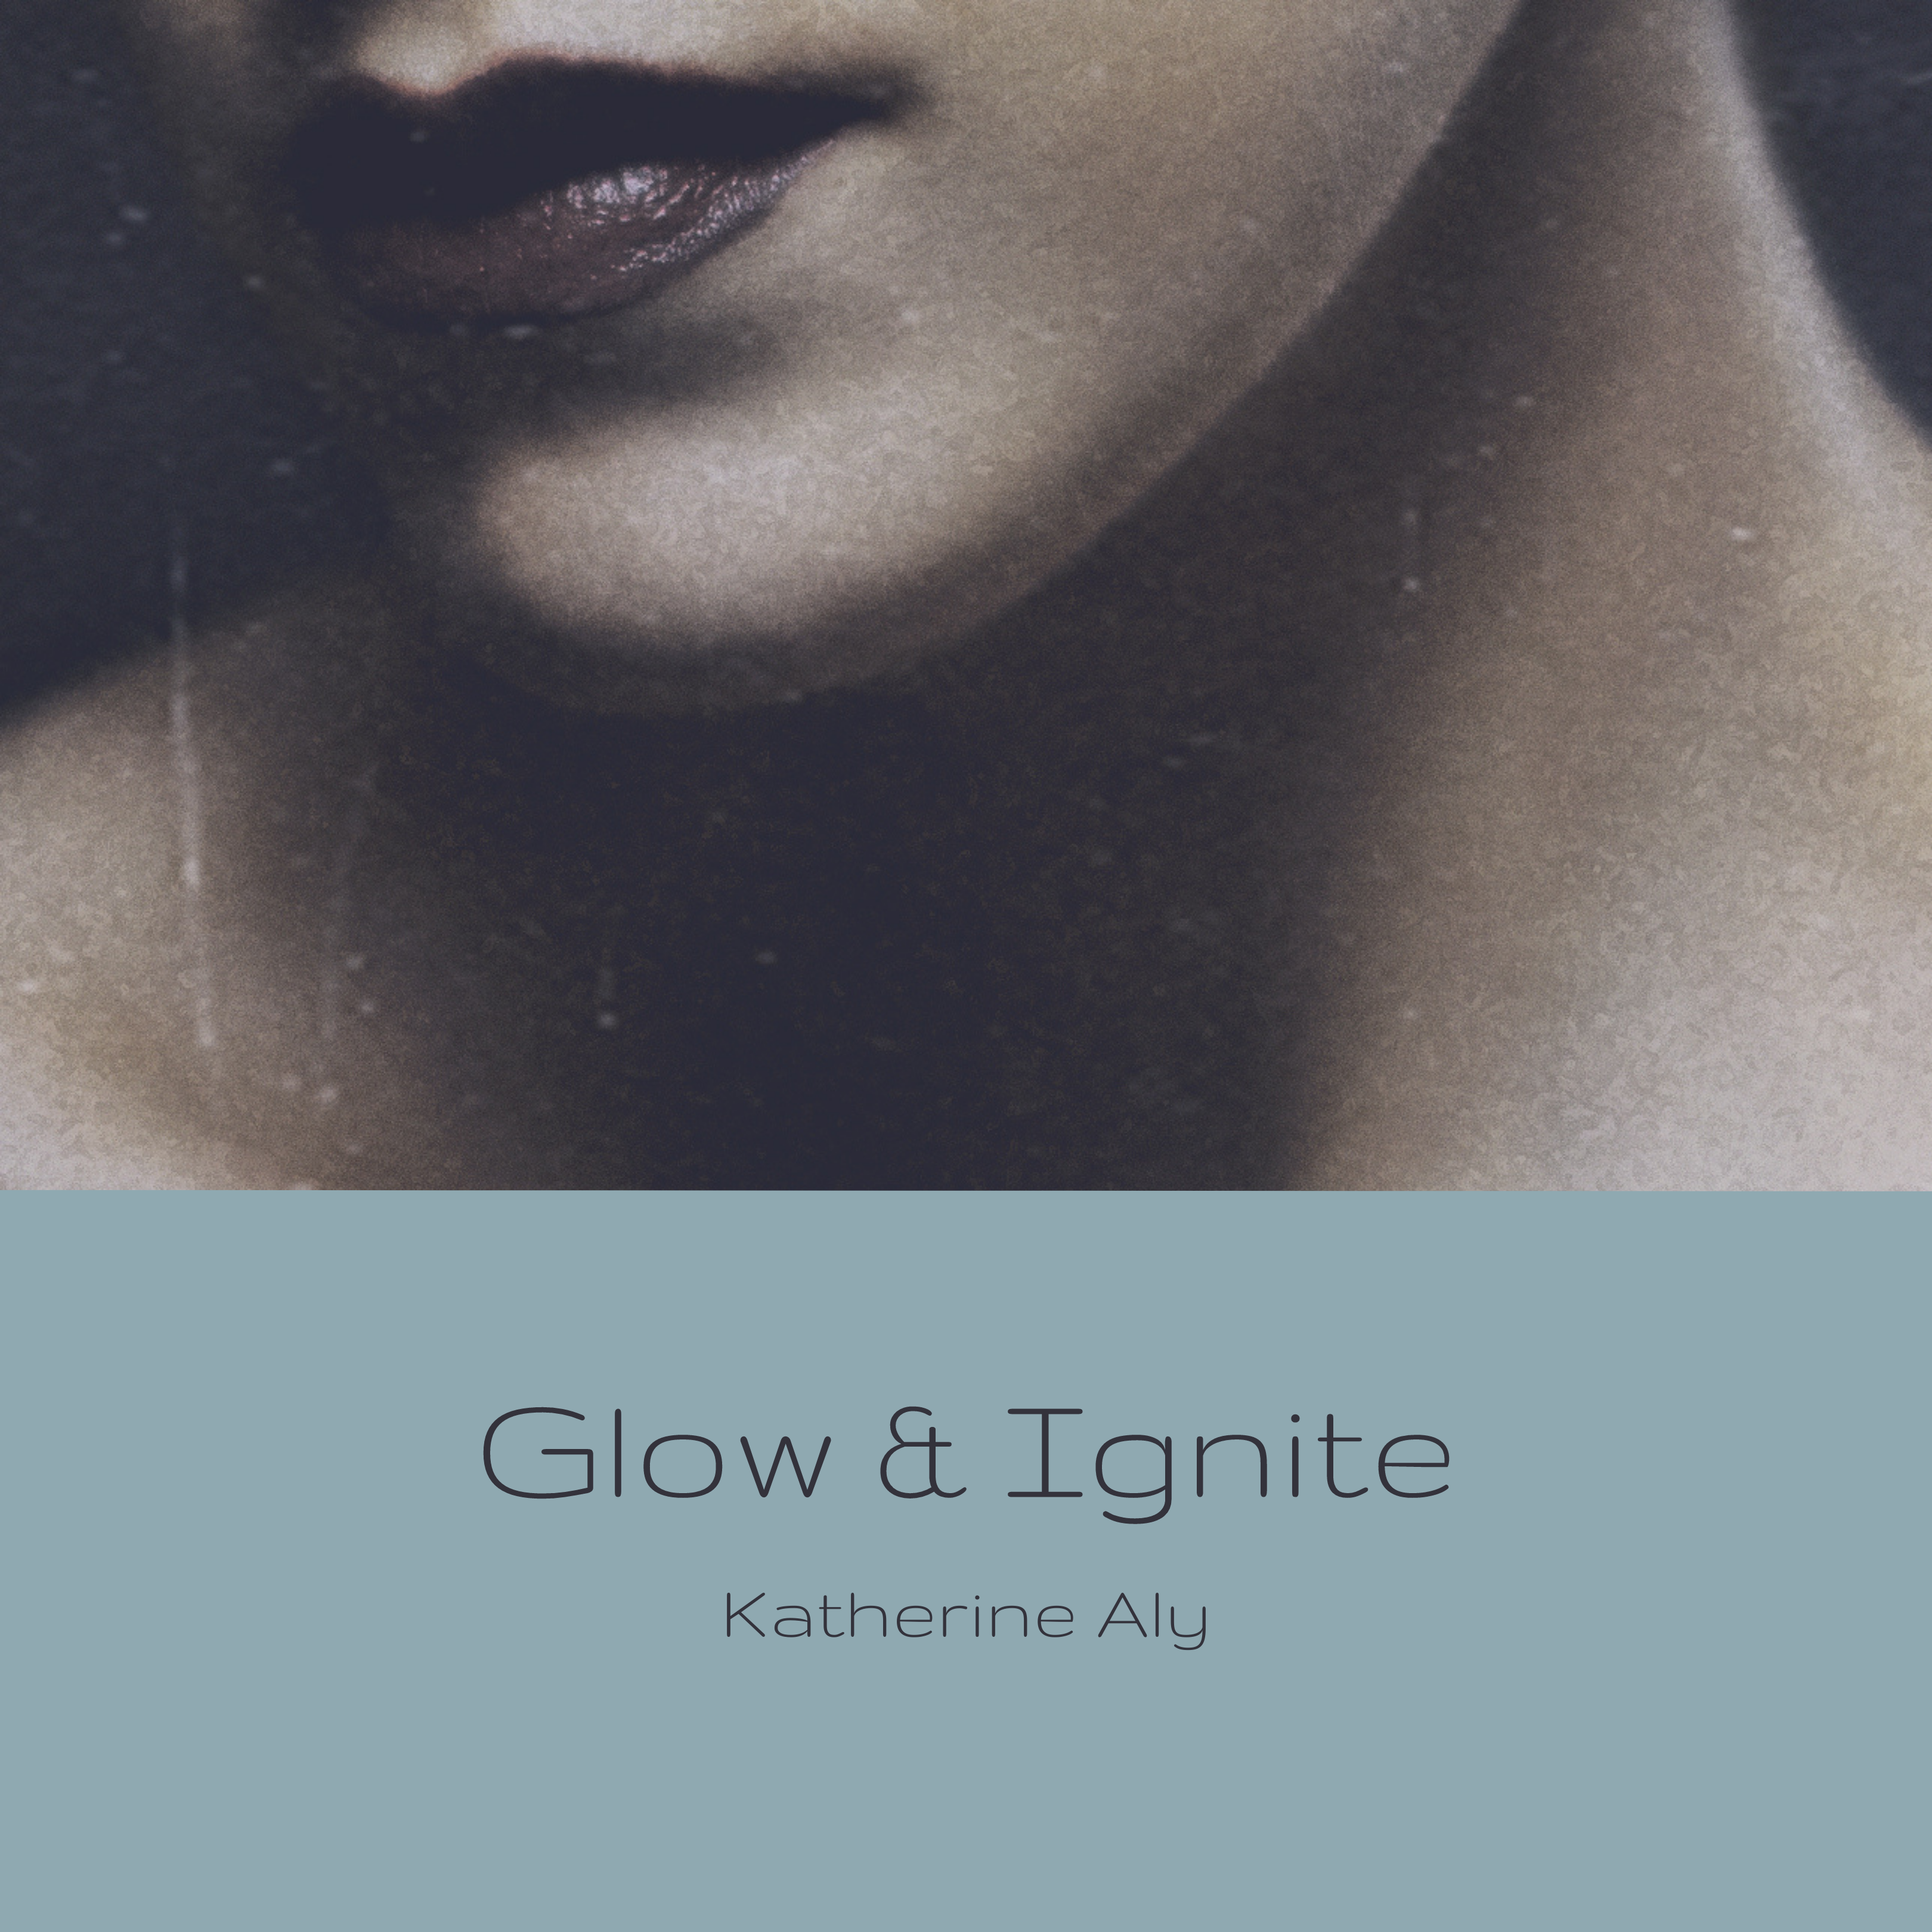 Glow & Ignite